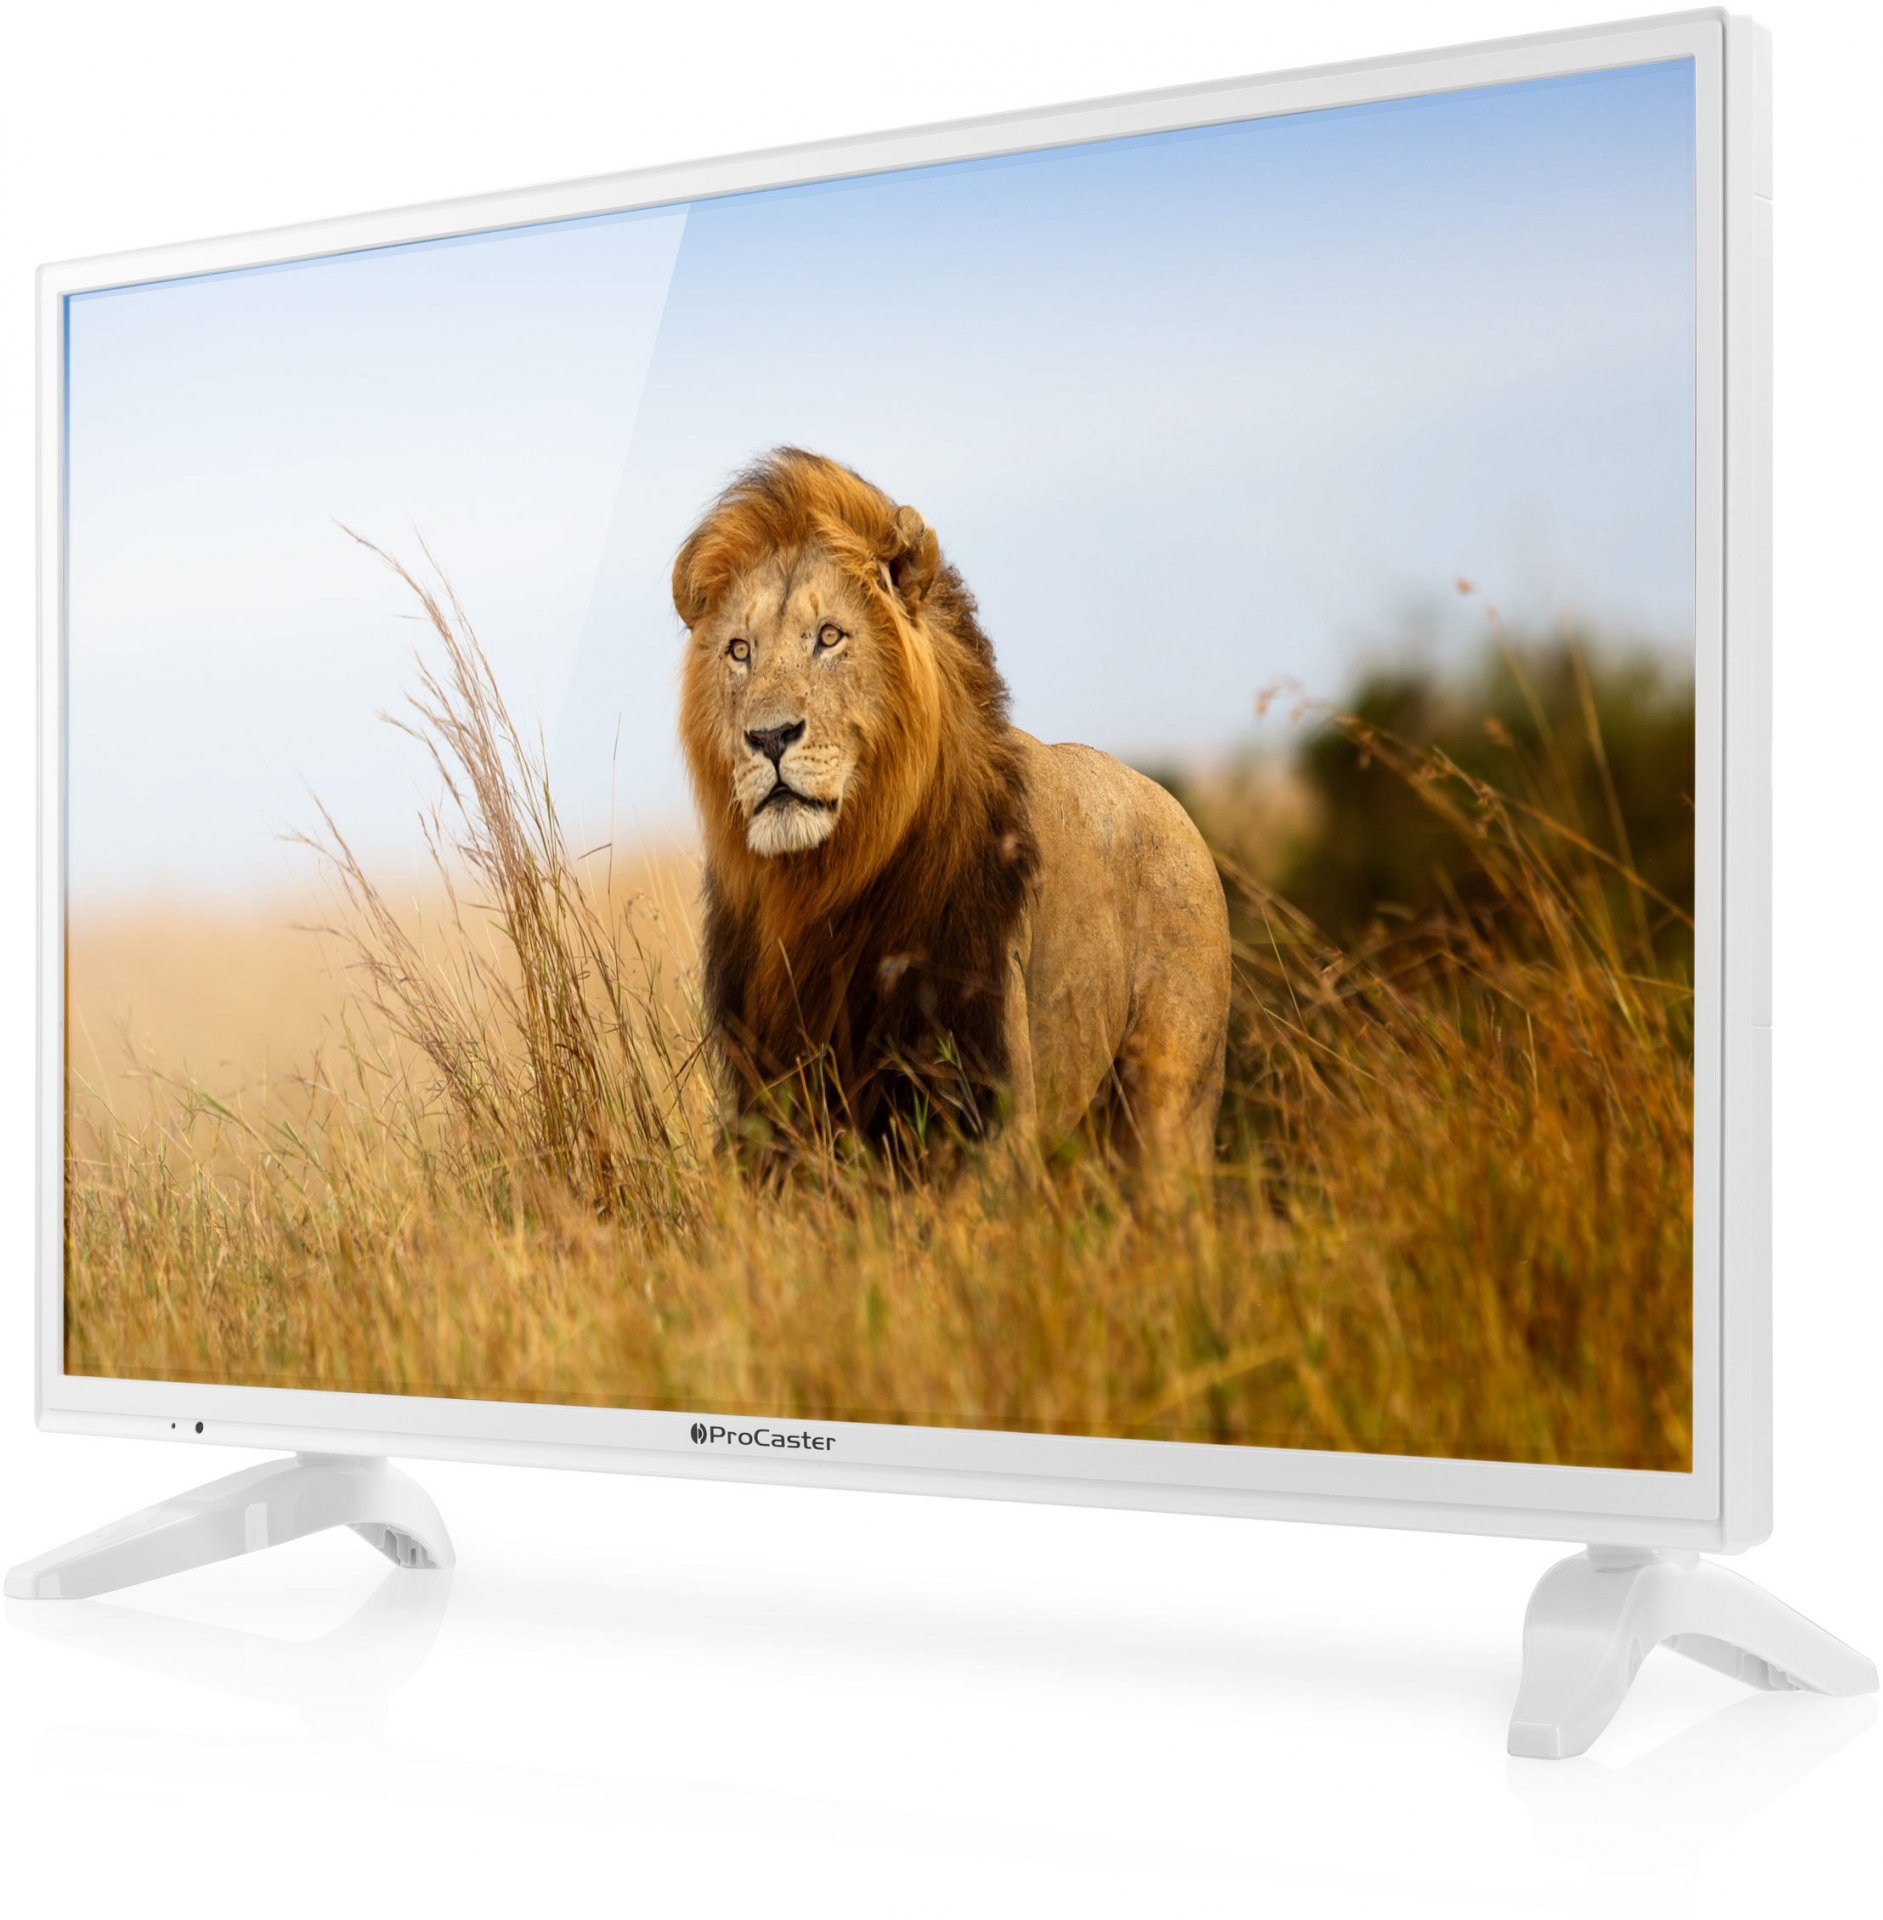 Купить телевизор smart tv телевизоры москве. Самсунг смарт ТВ 32 белый. Телевизор Procaster le-32f406 32". Смарт ТВ 32 дюйма белый. Samsung Smart TV 32 дюйма белый.